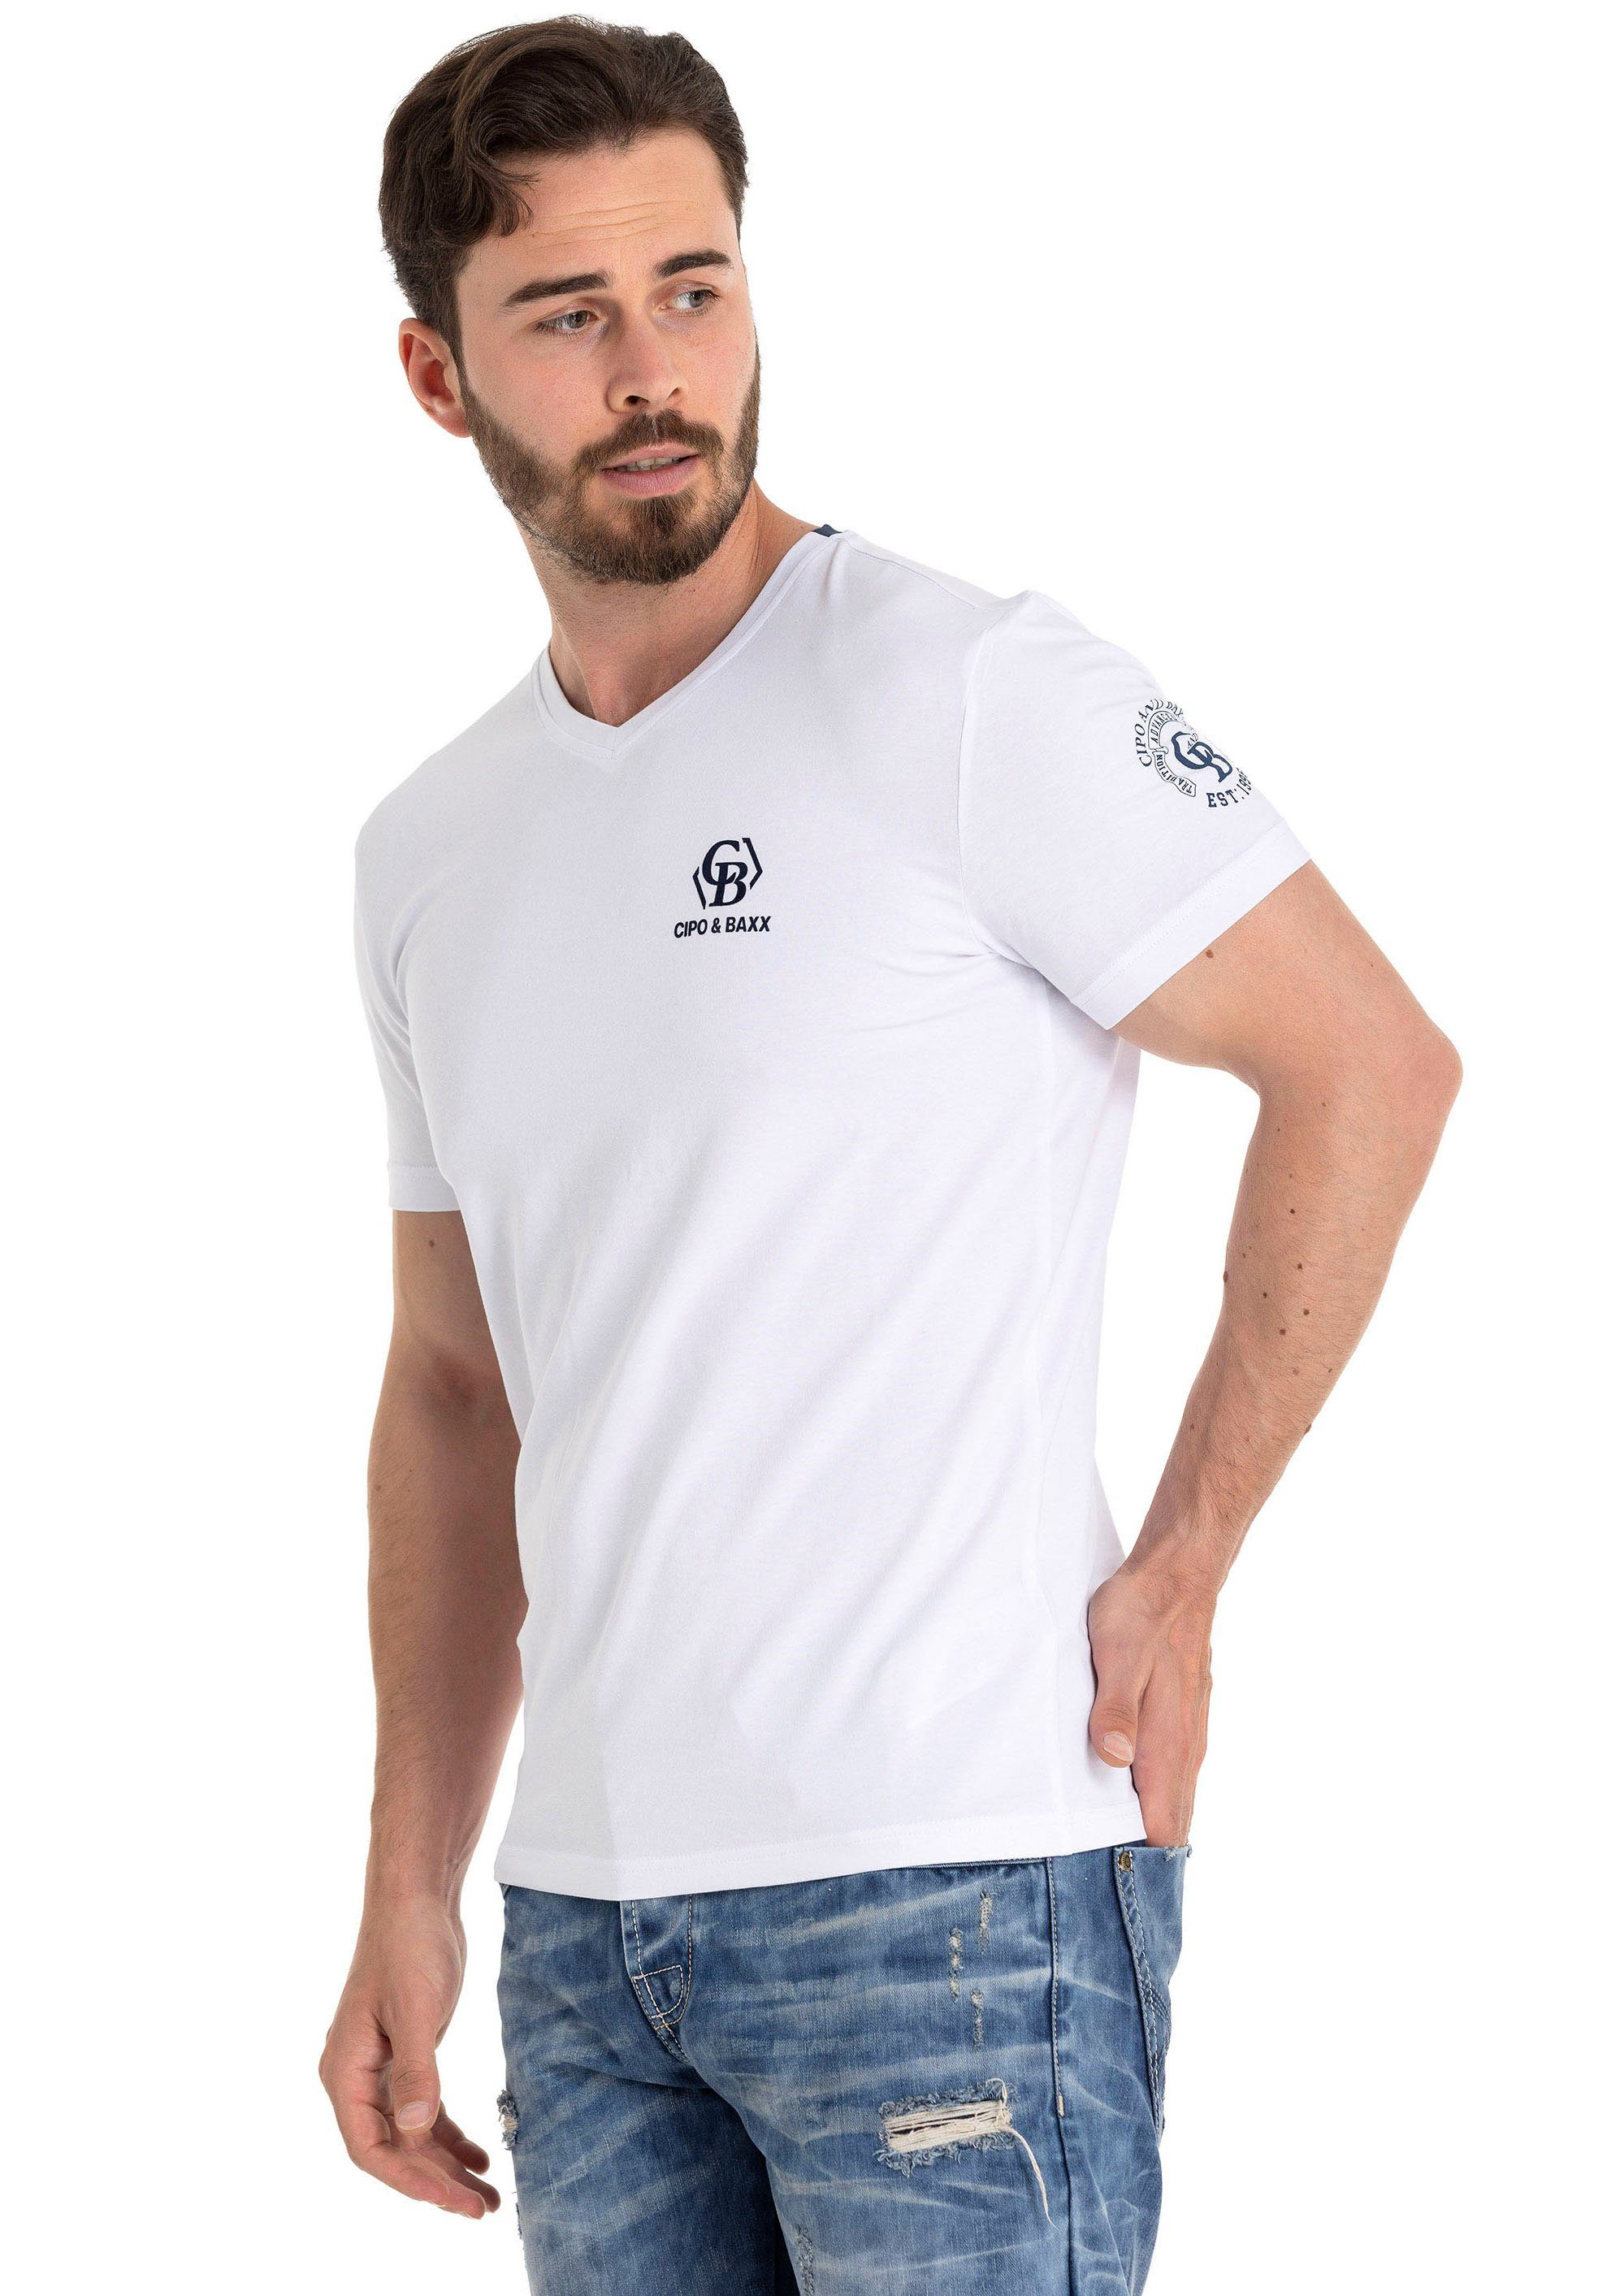 Cipo & Baxx V-Shirt mit Markenlabel in Samt-Optik white